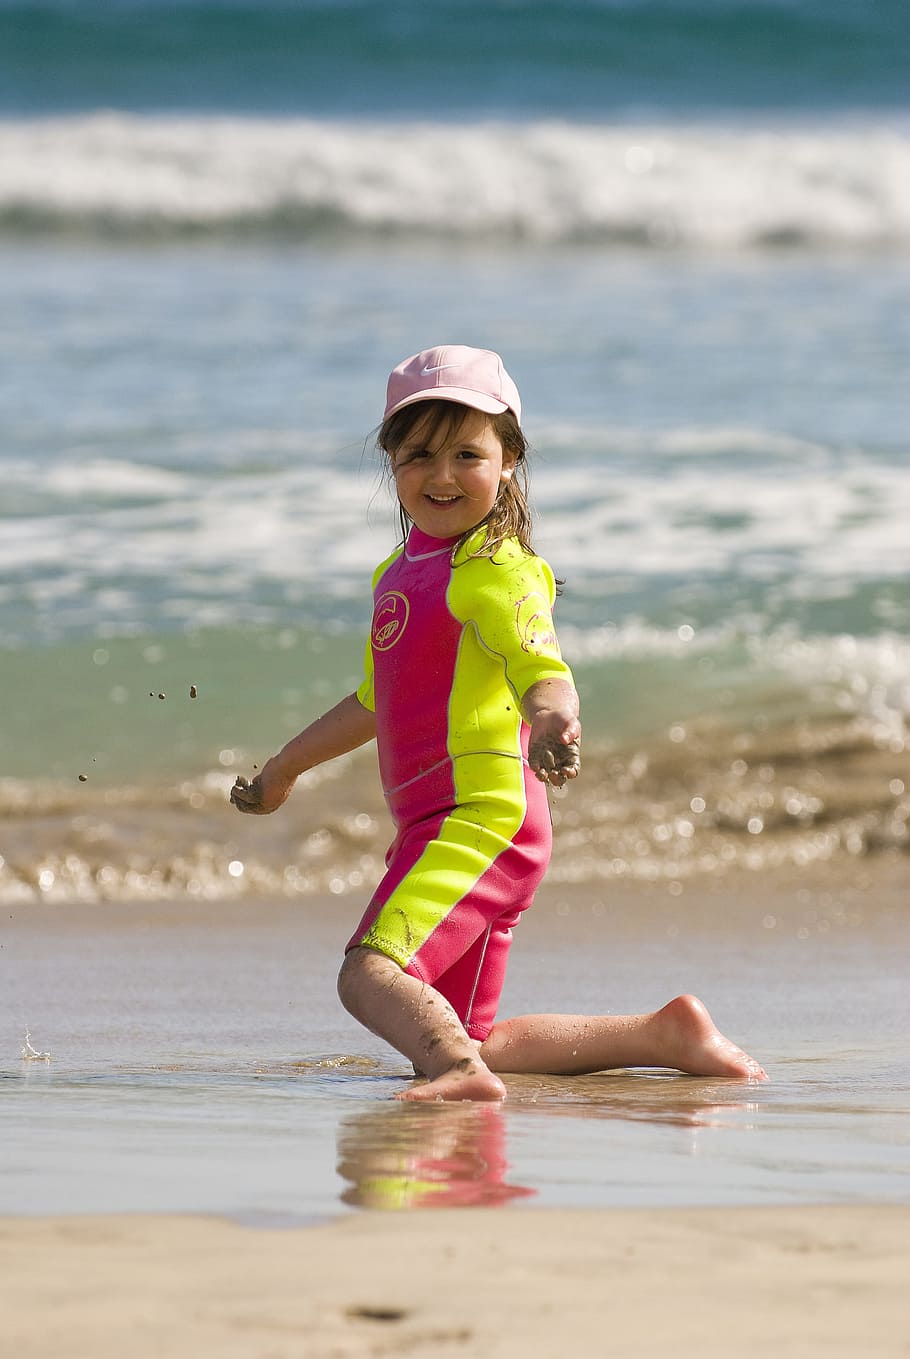 Girl, Wetsuit, Beach, Sand, Smile, beach, sand, happy, child, full length, children only